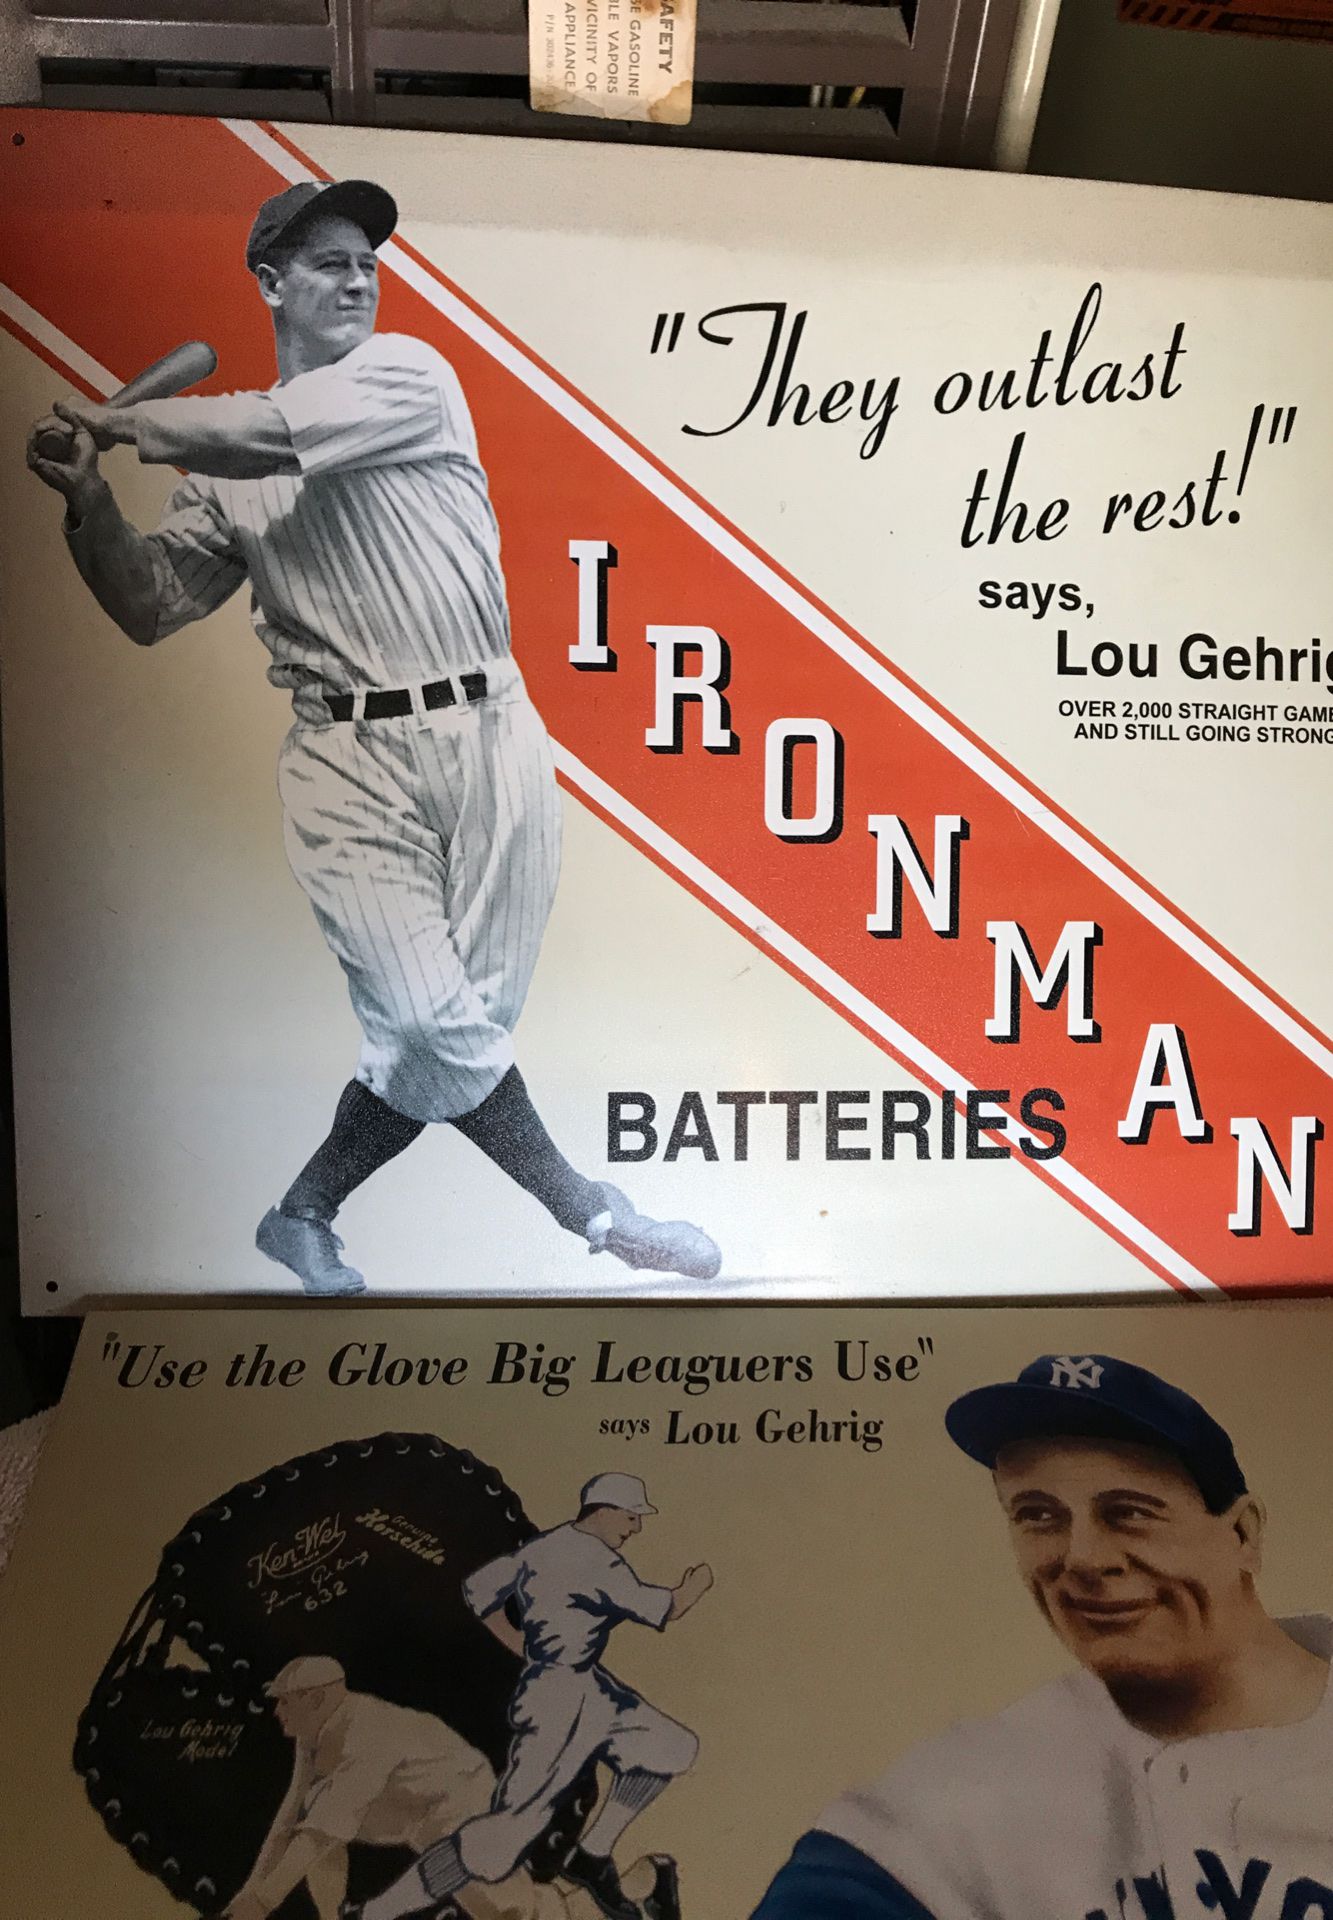 Old baseball poster